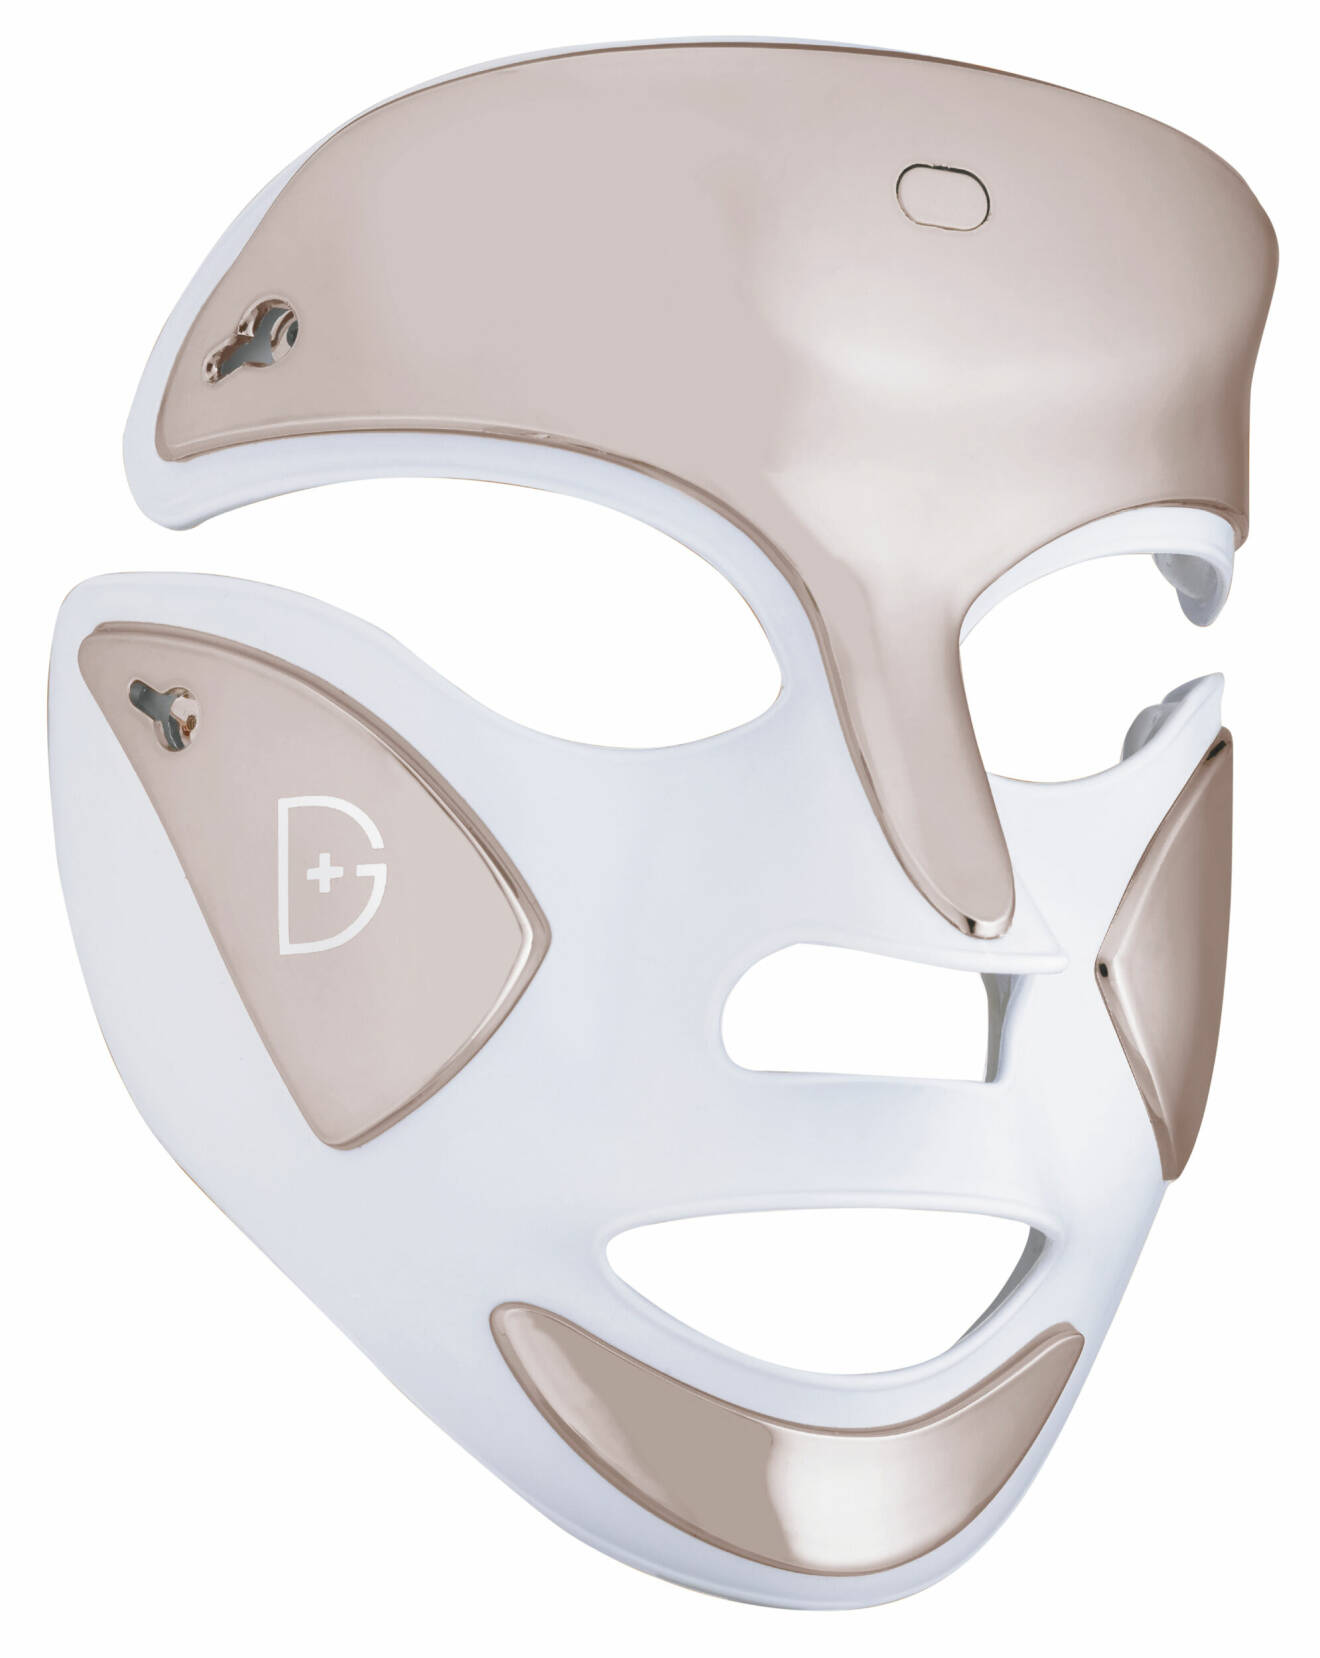 Spectra Lite Face Wear Pro från Dr Dennis Gross